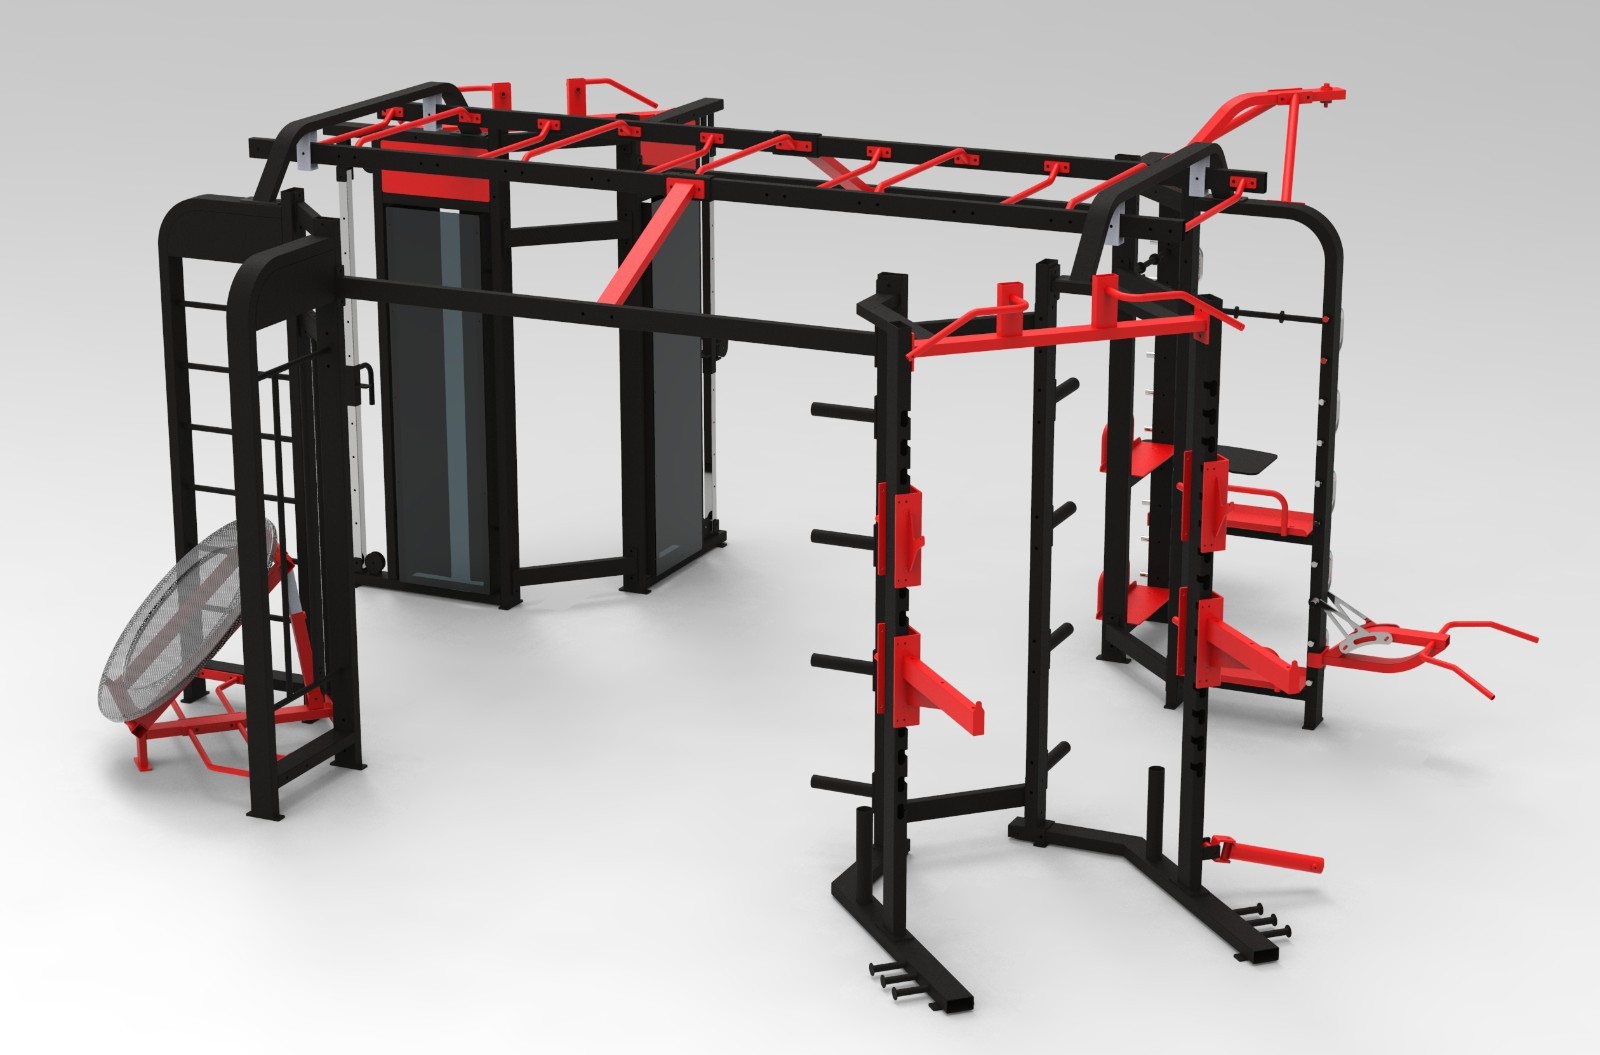 Lifefitness Crossfit rig rack